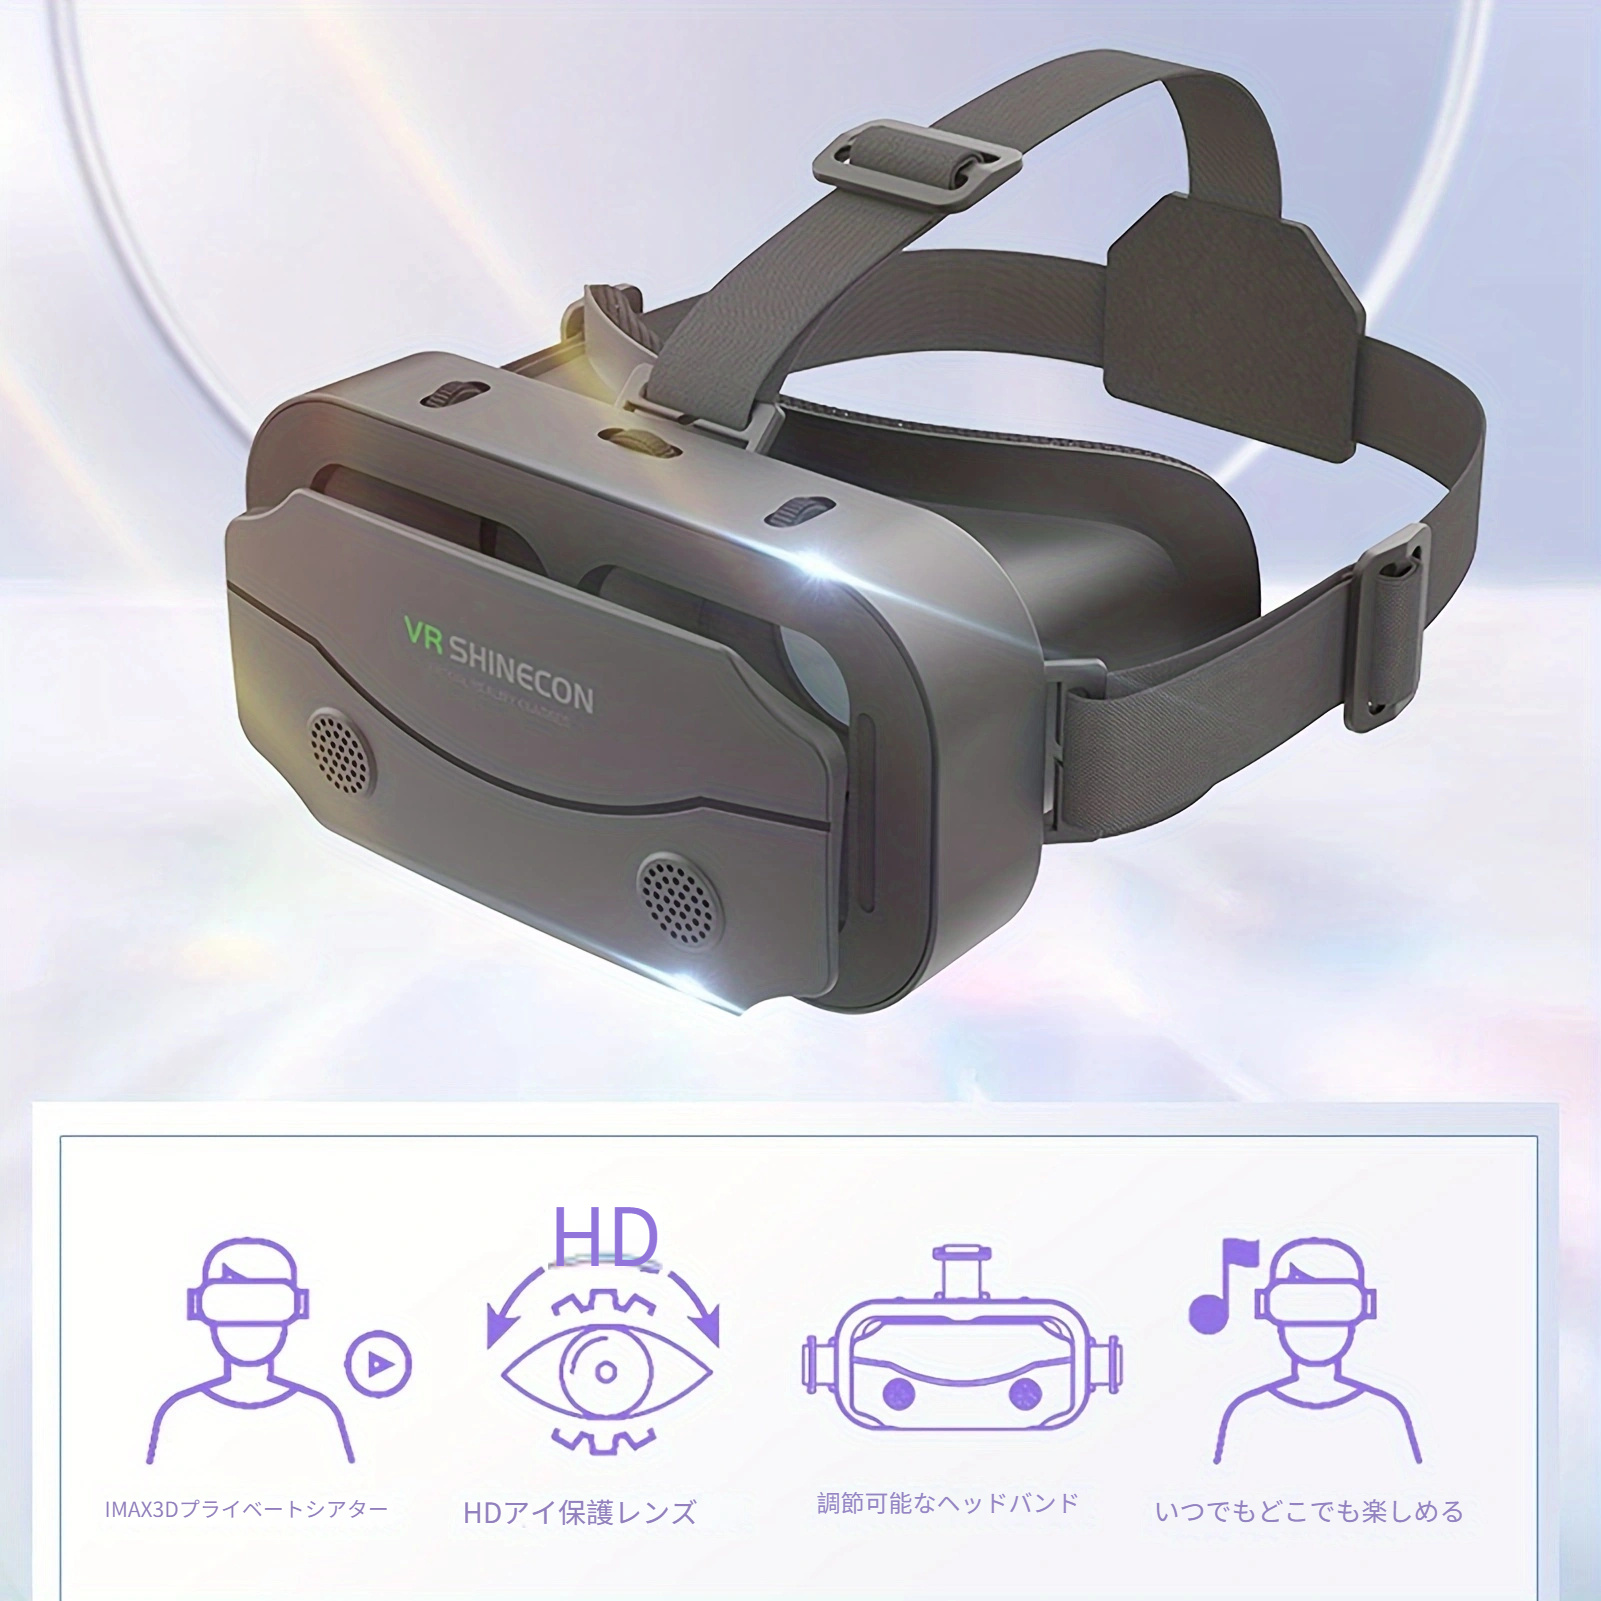 VR メガネ 3D ムービー統合ゲーム コンソール、没入型仮想現実メガネ